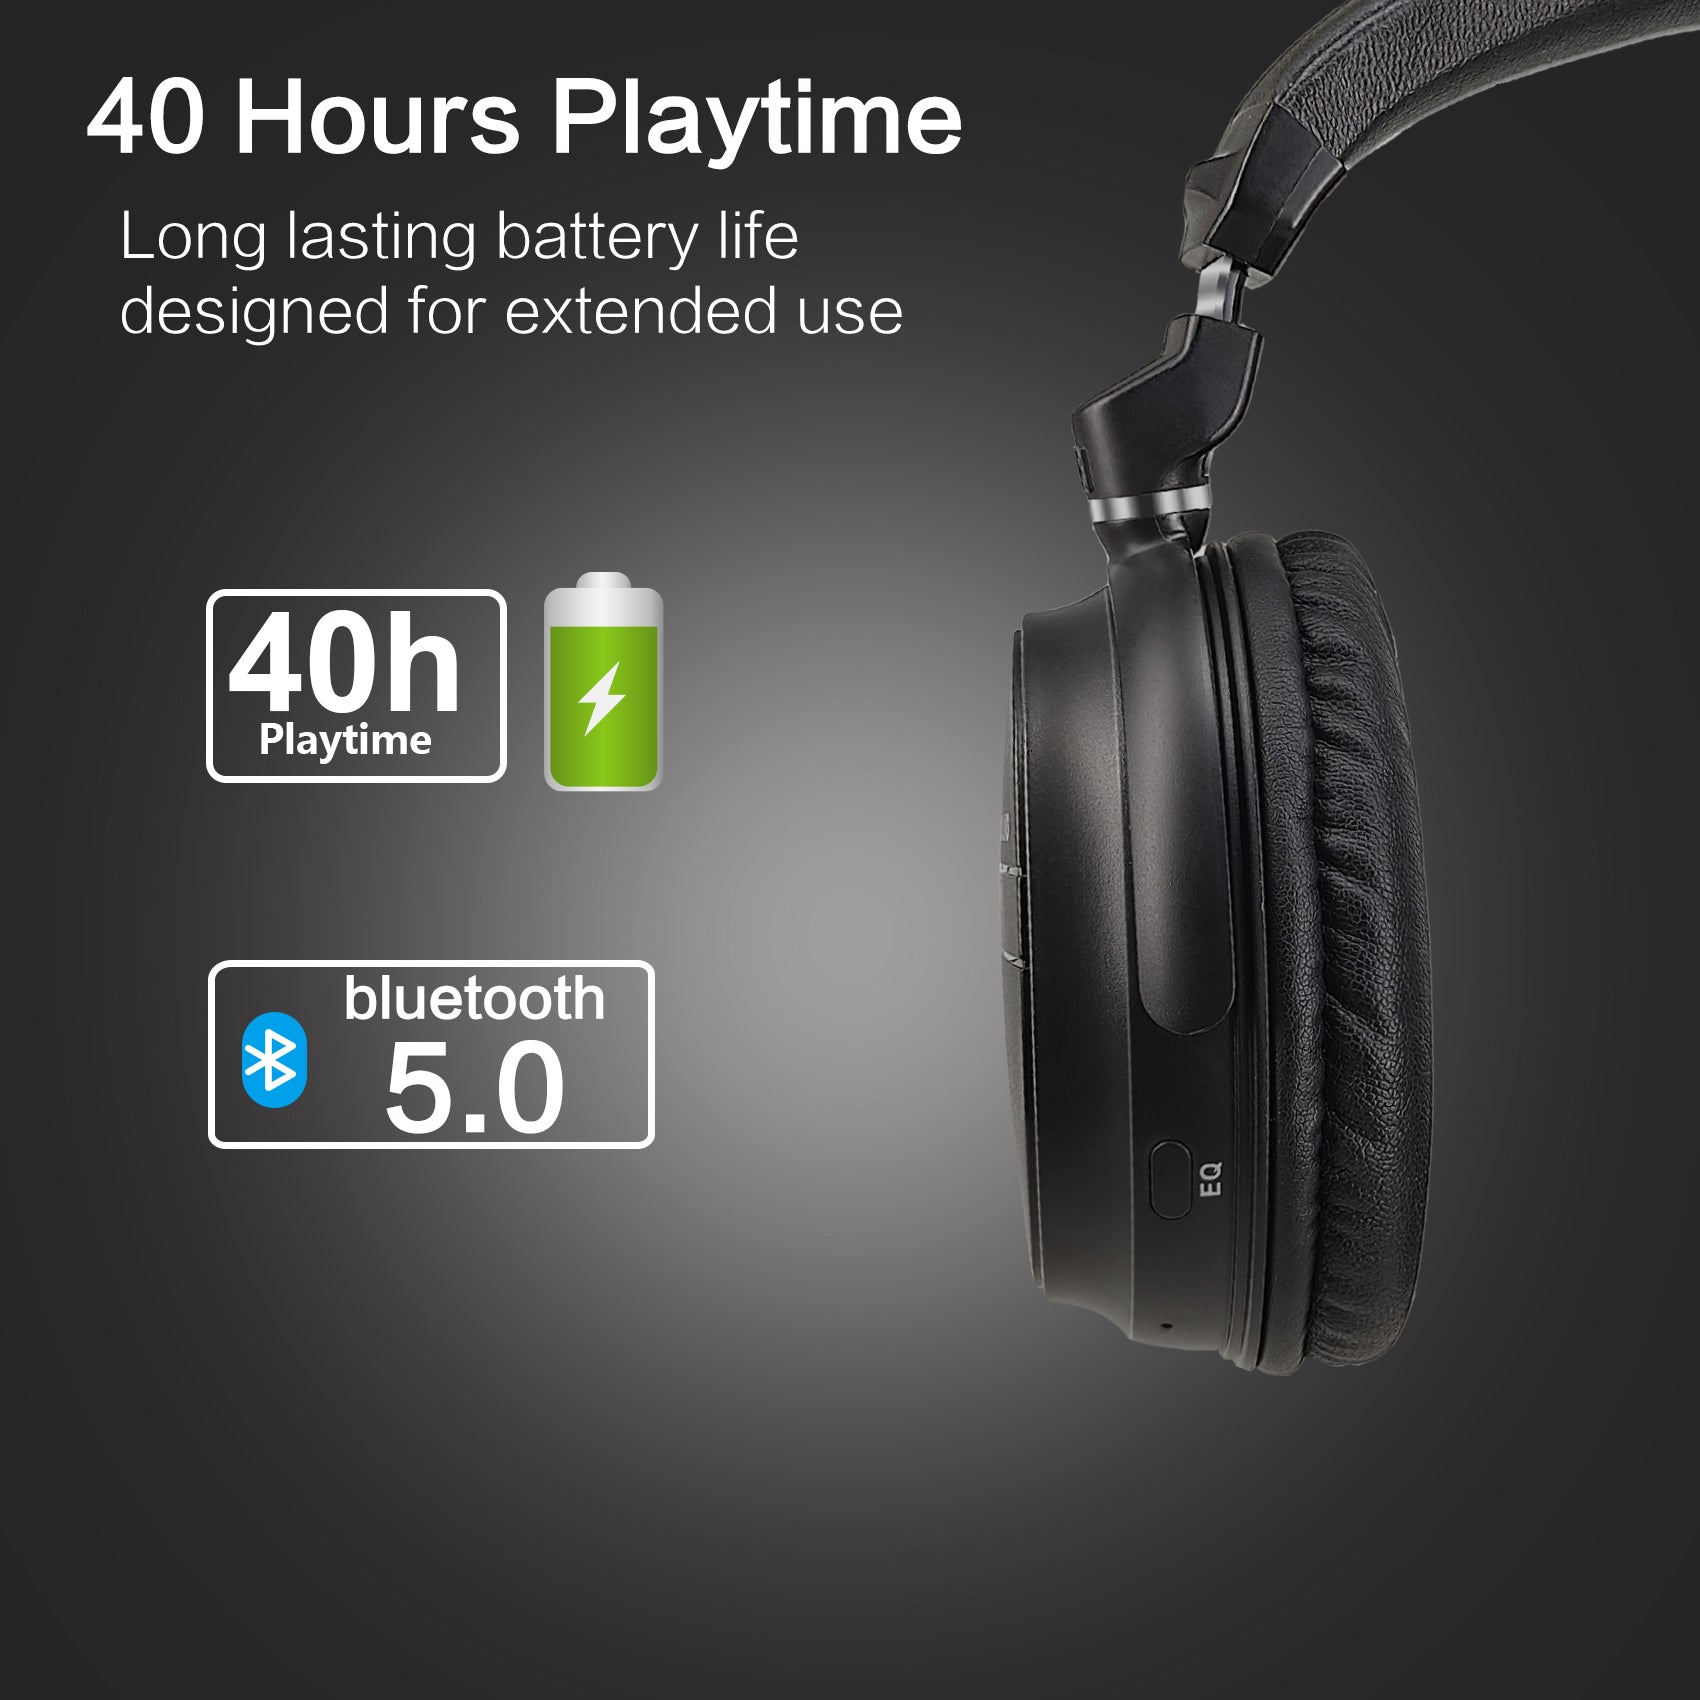 Simolio 716B wireless bluetooth headphones long battery life